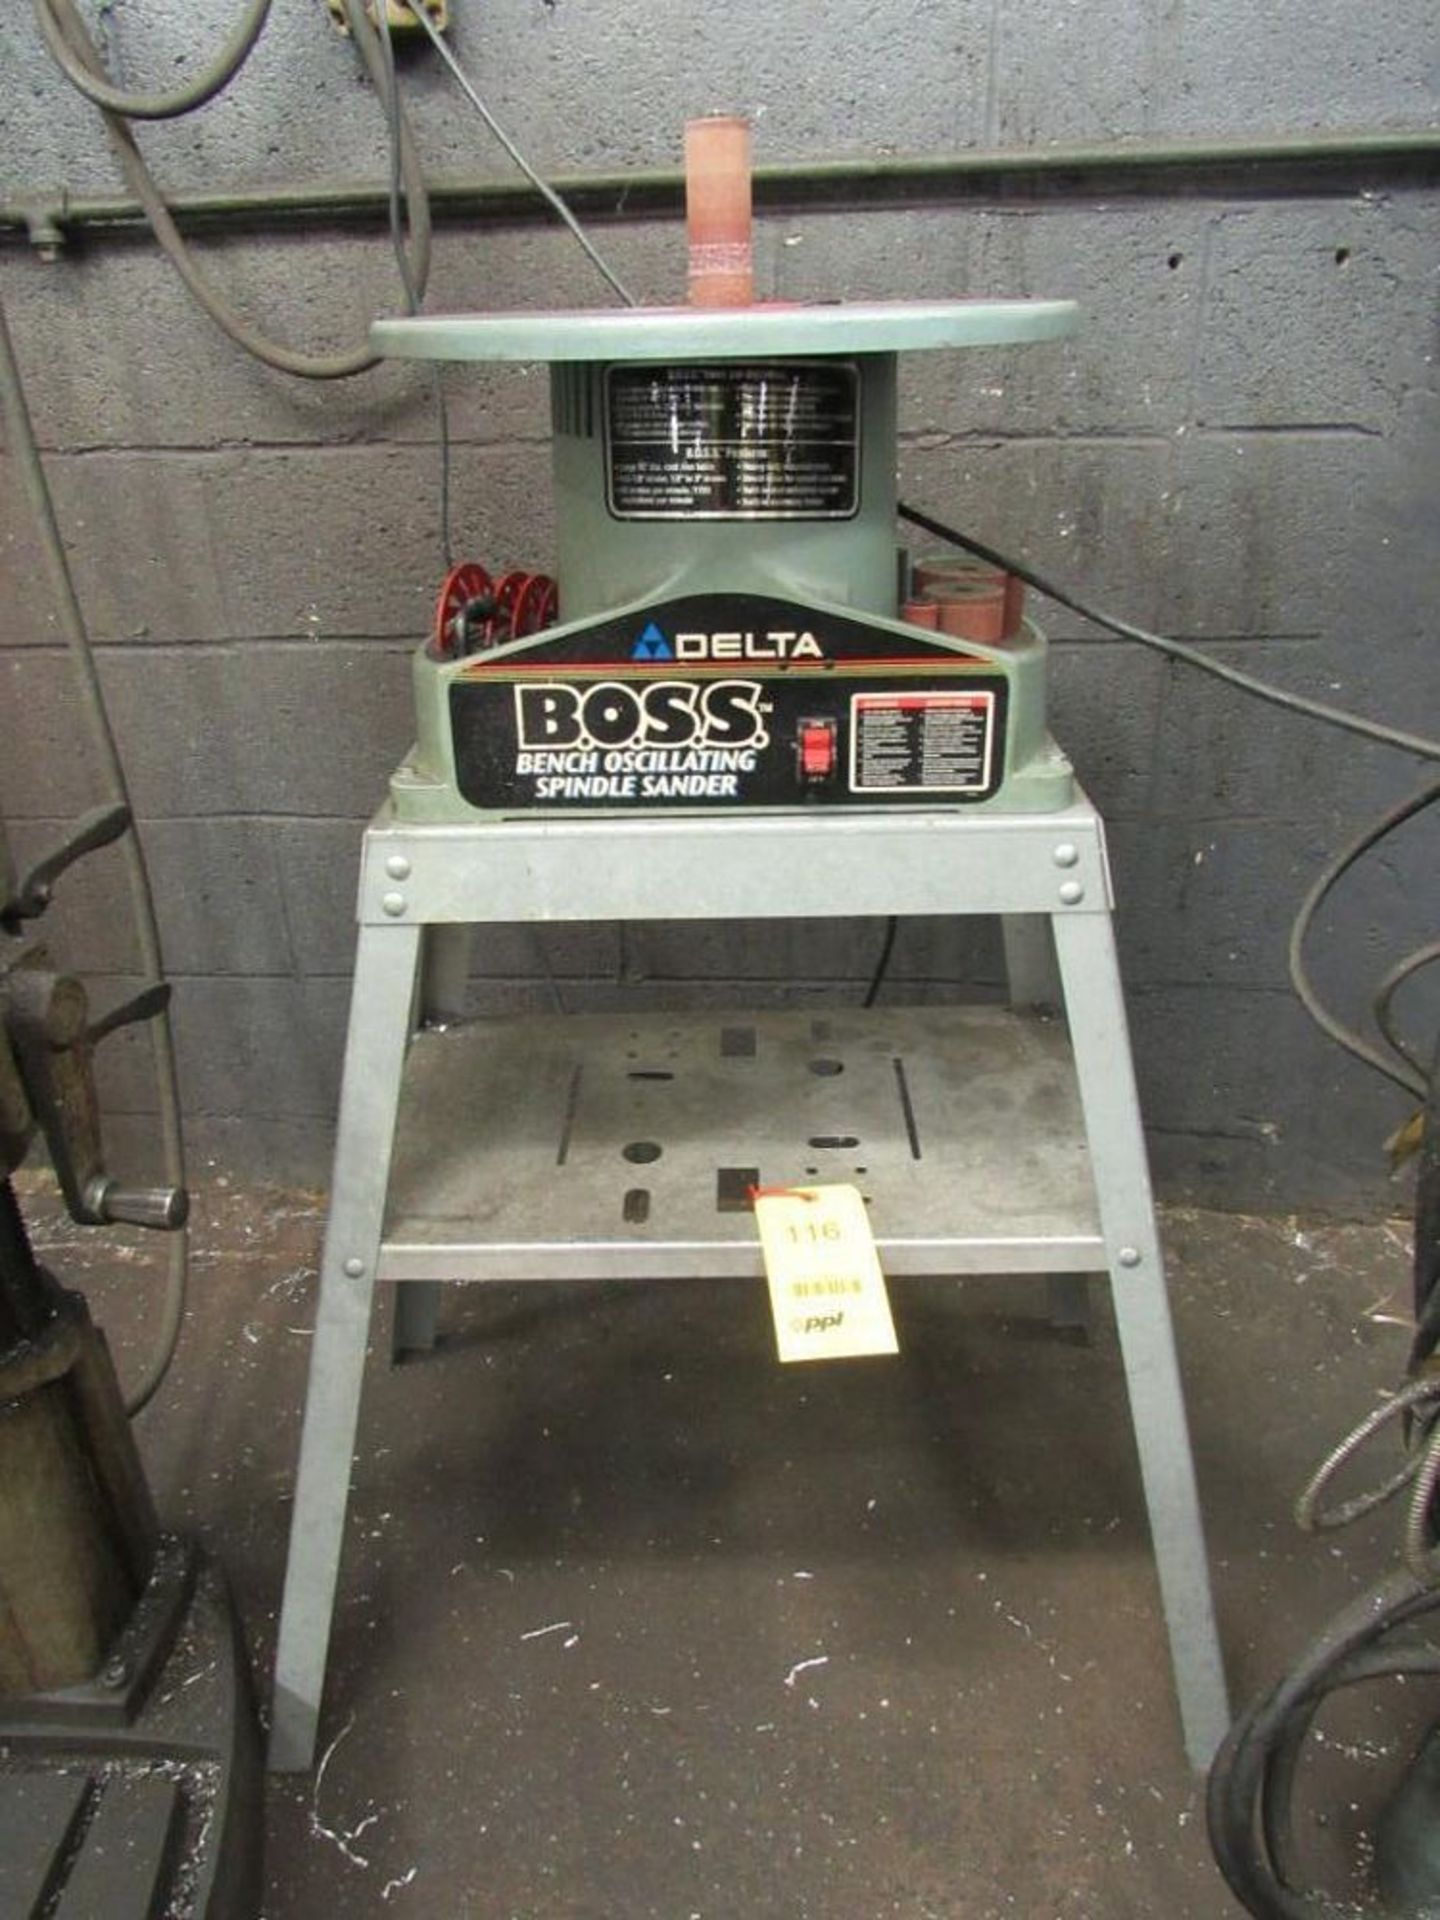 Boss Bench Oscillating Spindle Sander Model 31-17, S/N J-9933 (Location B)